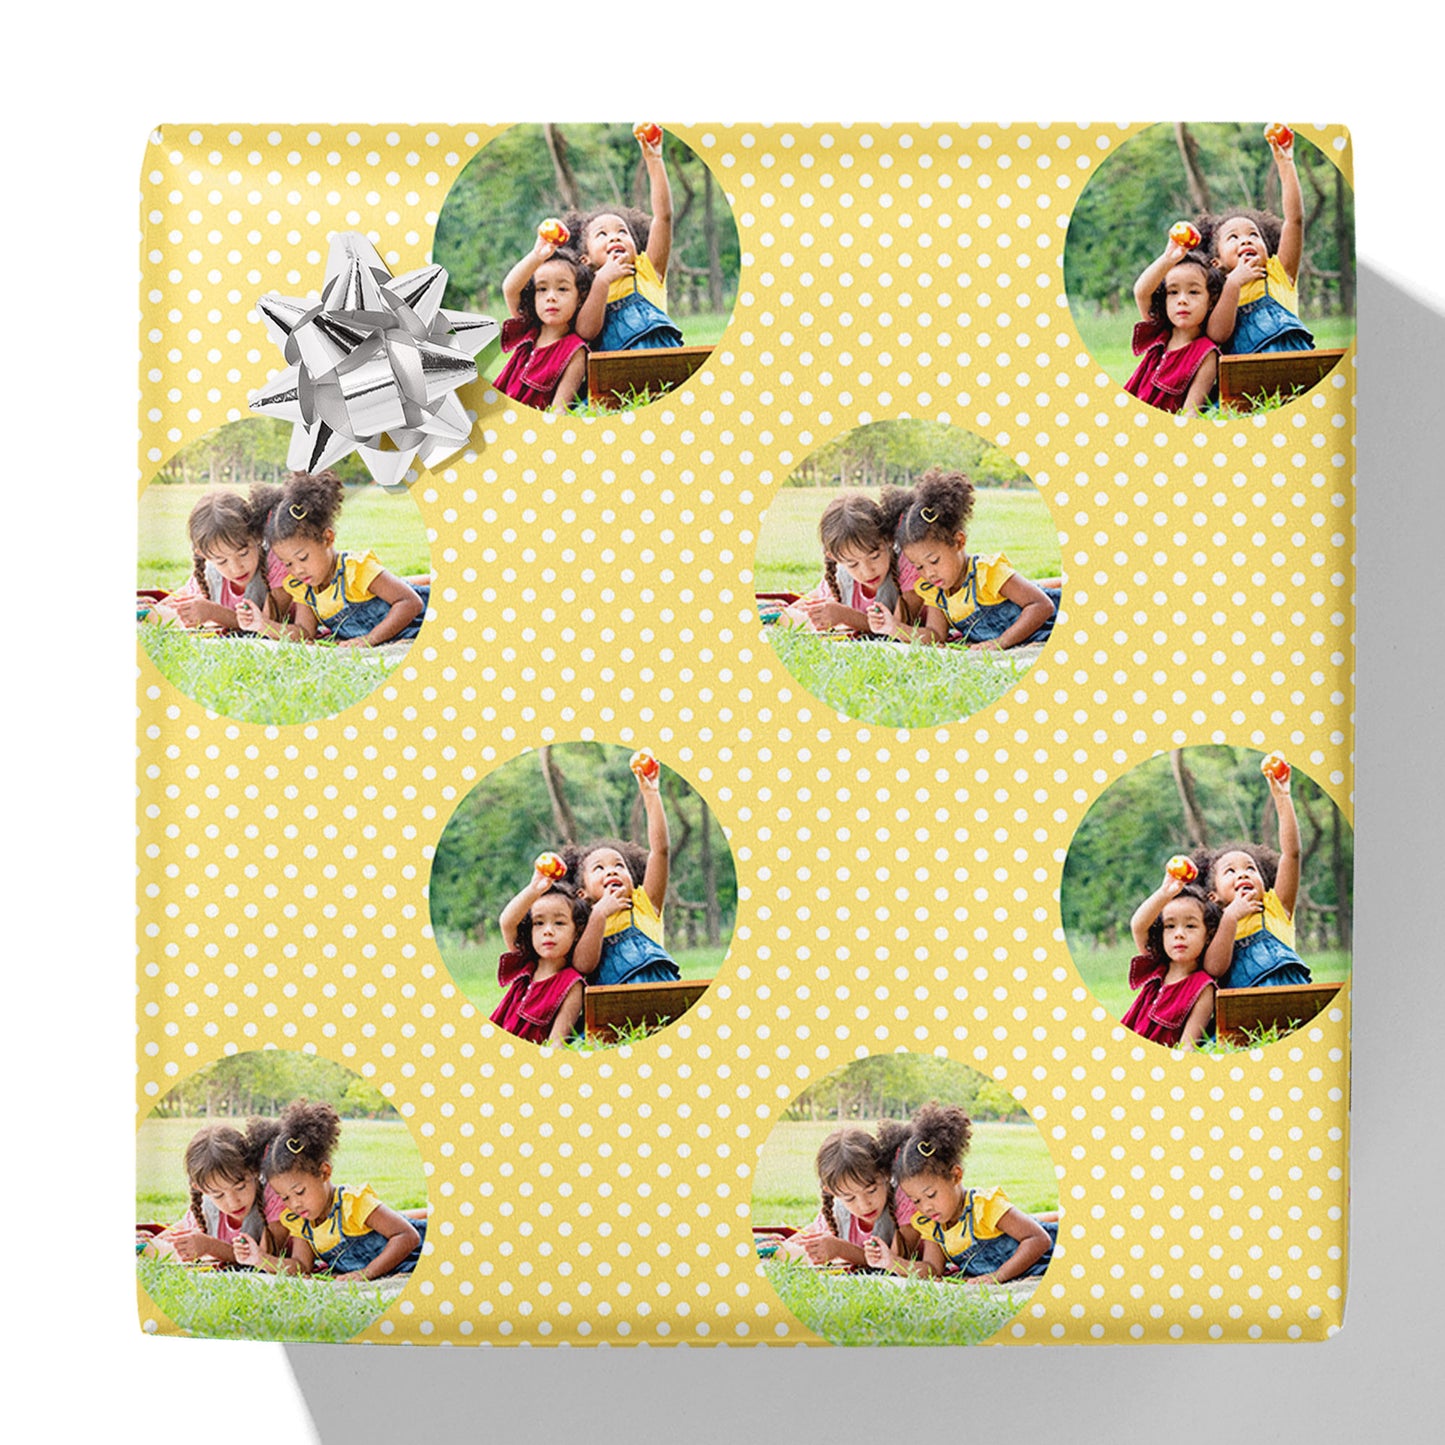 Pastel Spotty Photo Gift Wrap